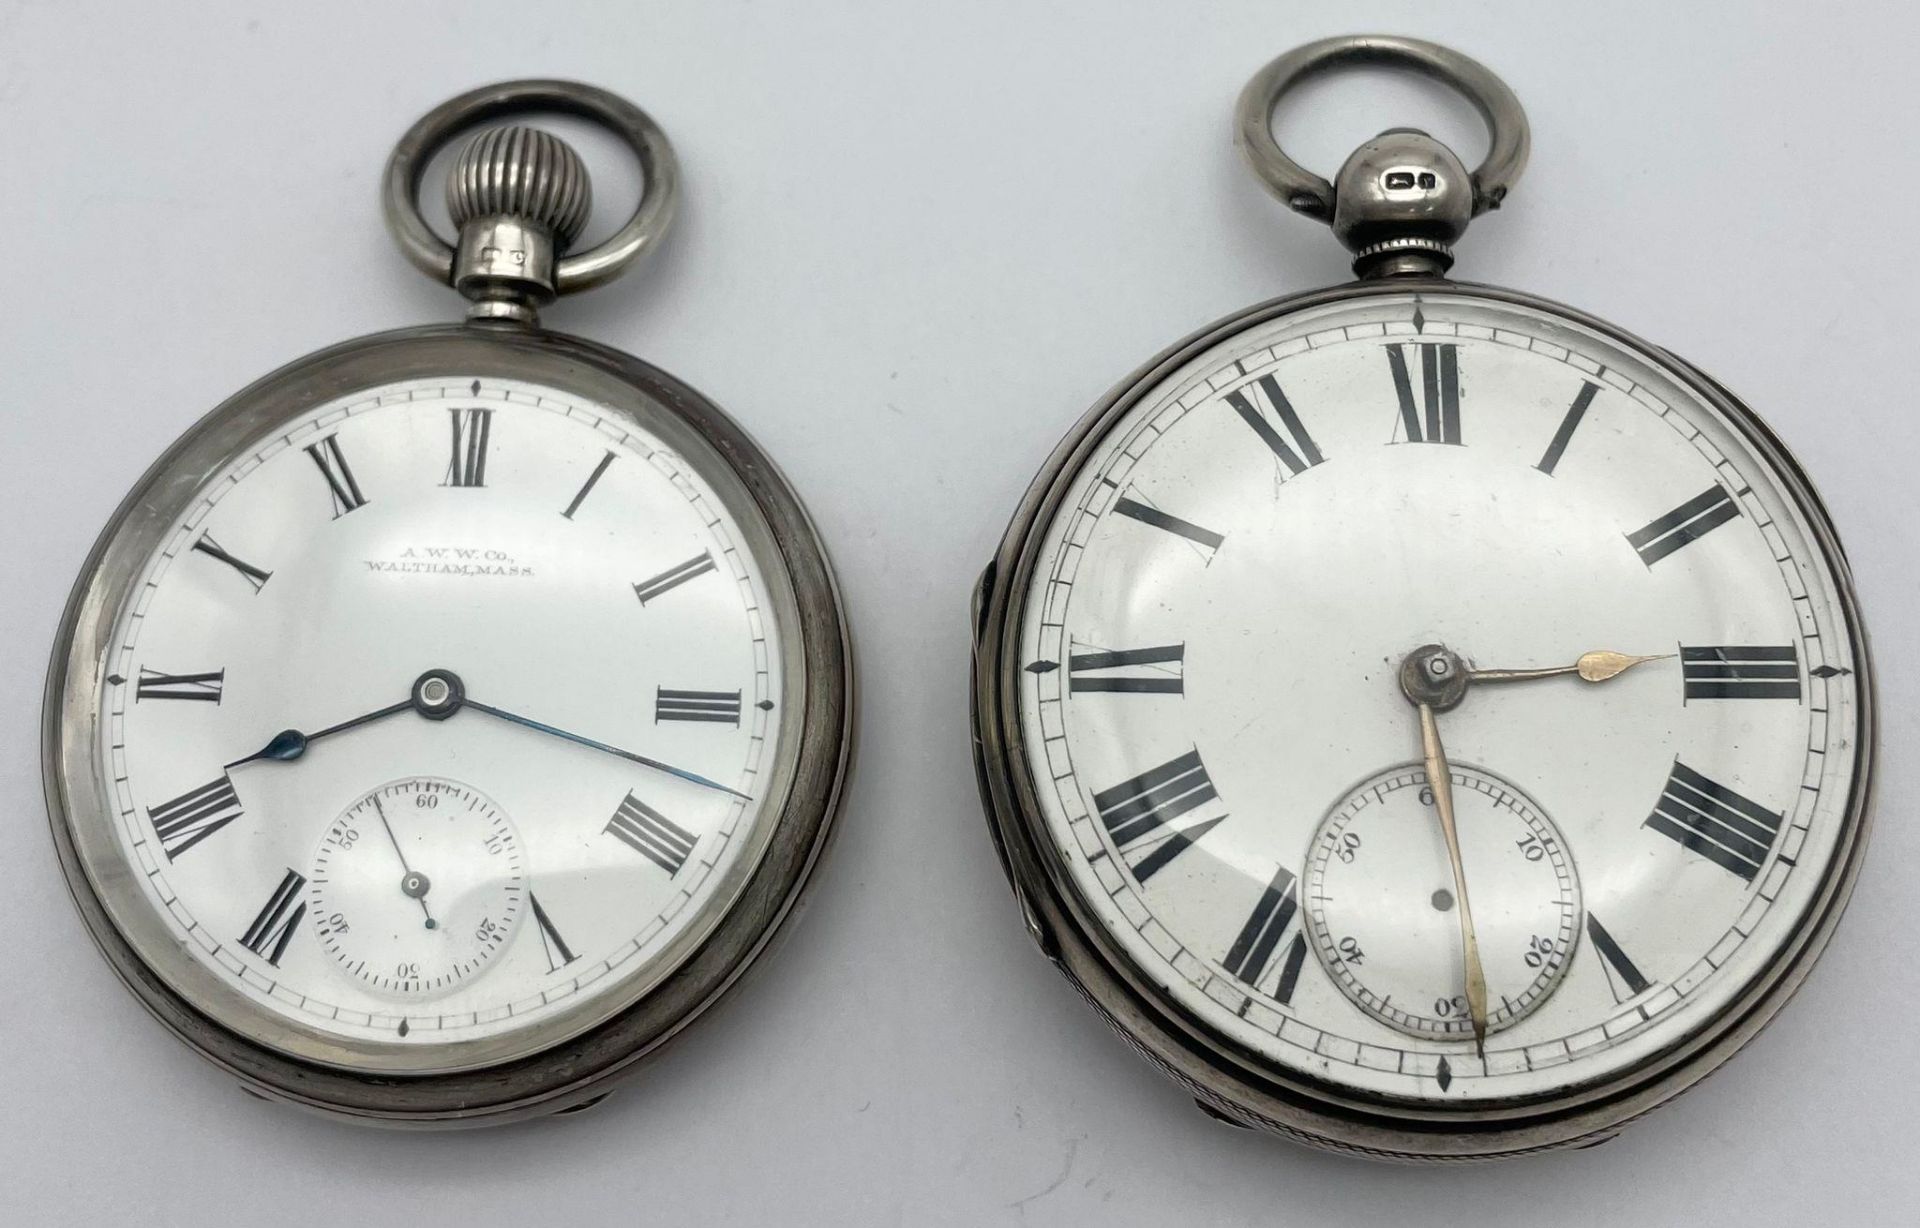 A Waltham Pocket Watch, Top winder, Hallmarked Silver in Good Condition (overwound), Plus Solid